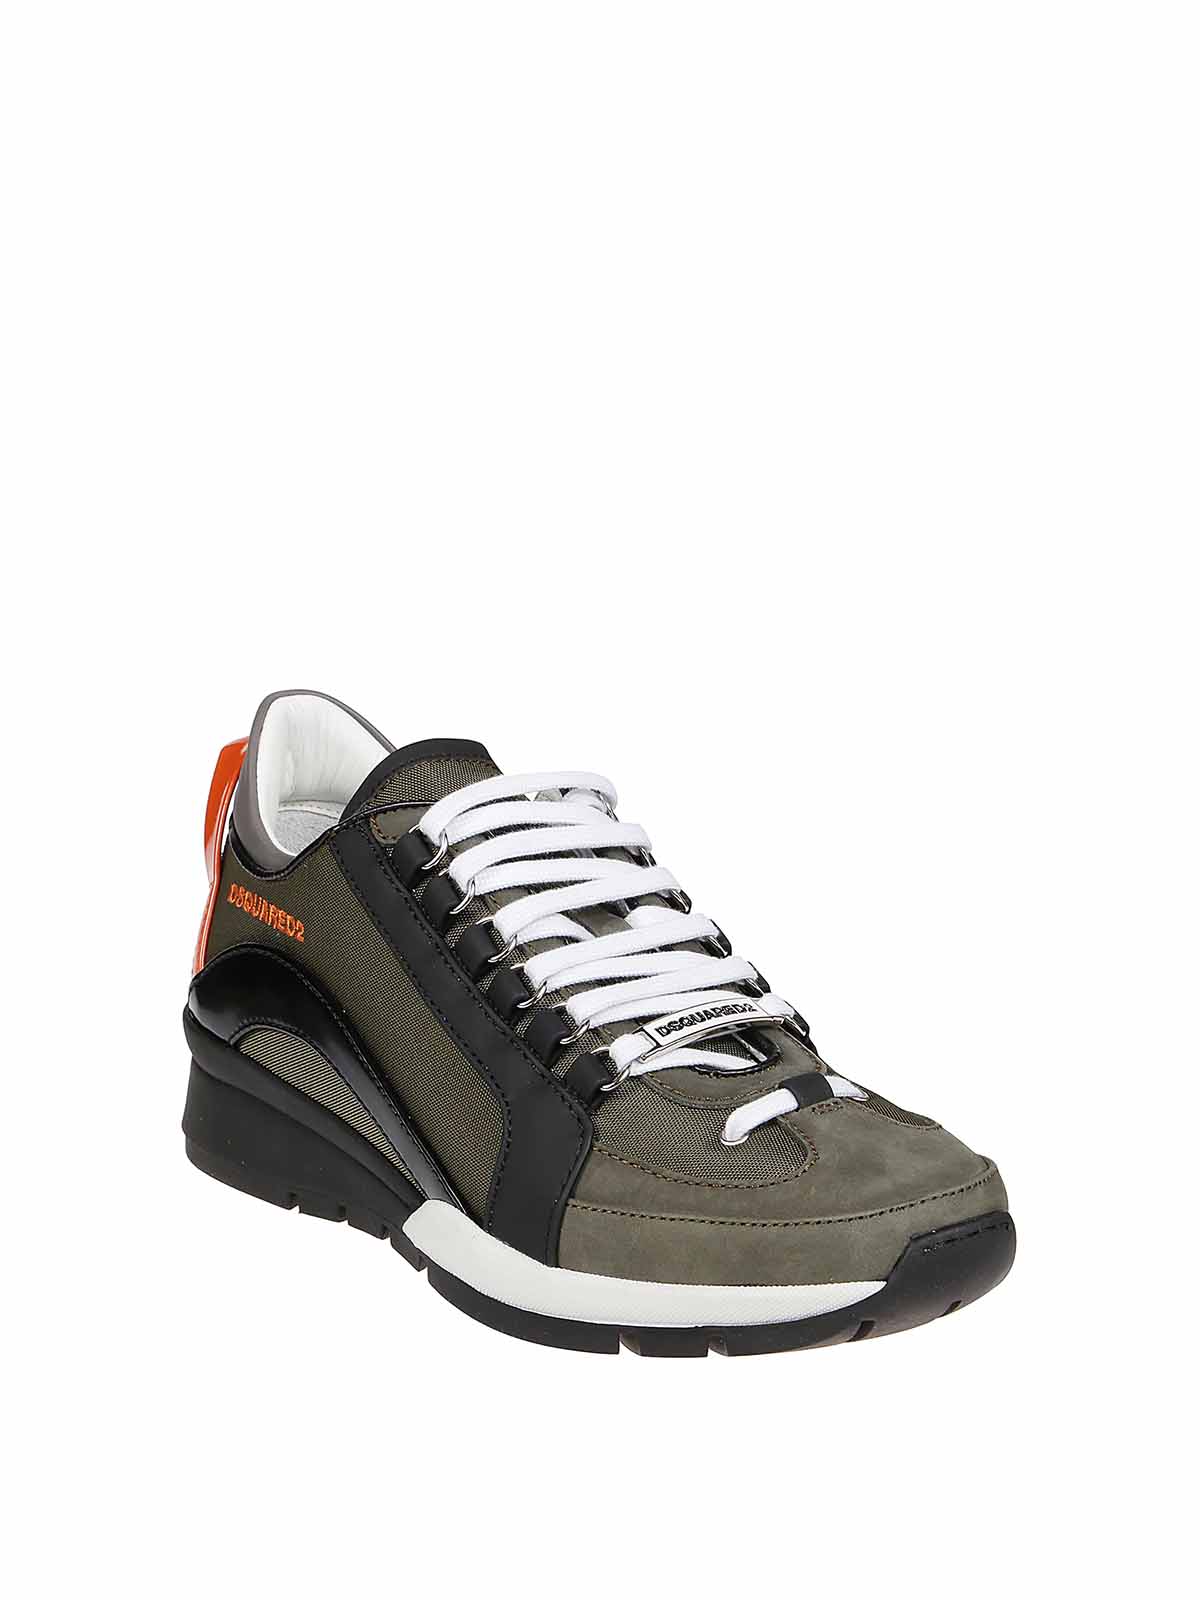 Uluru Omgeving Wederzijds Trainers Dsquared2 - 551 green sneakers - SNM050509702558M1489 | iKRIX.com